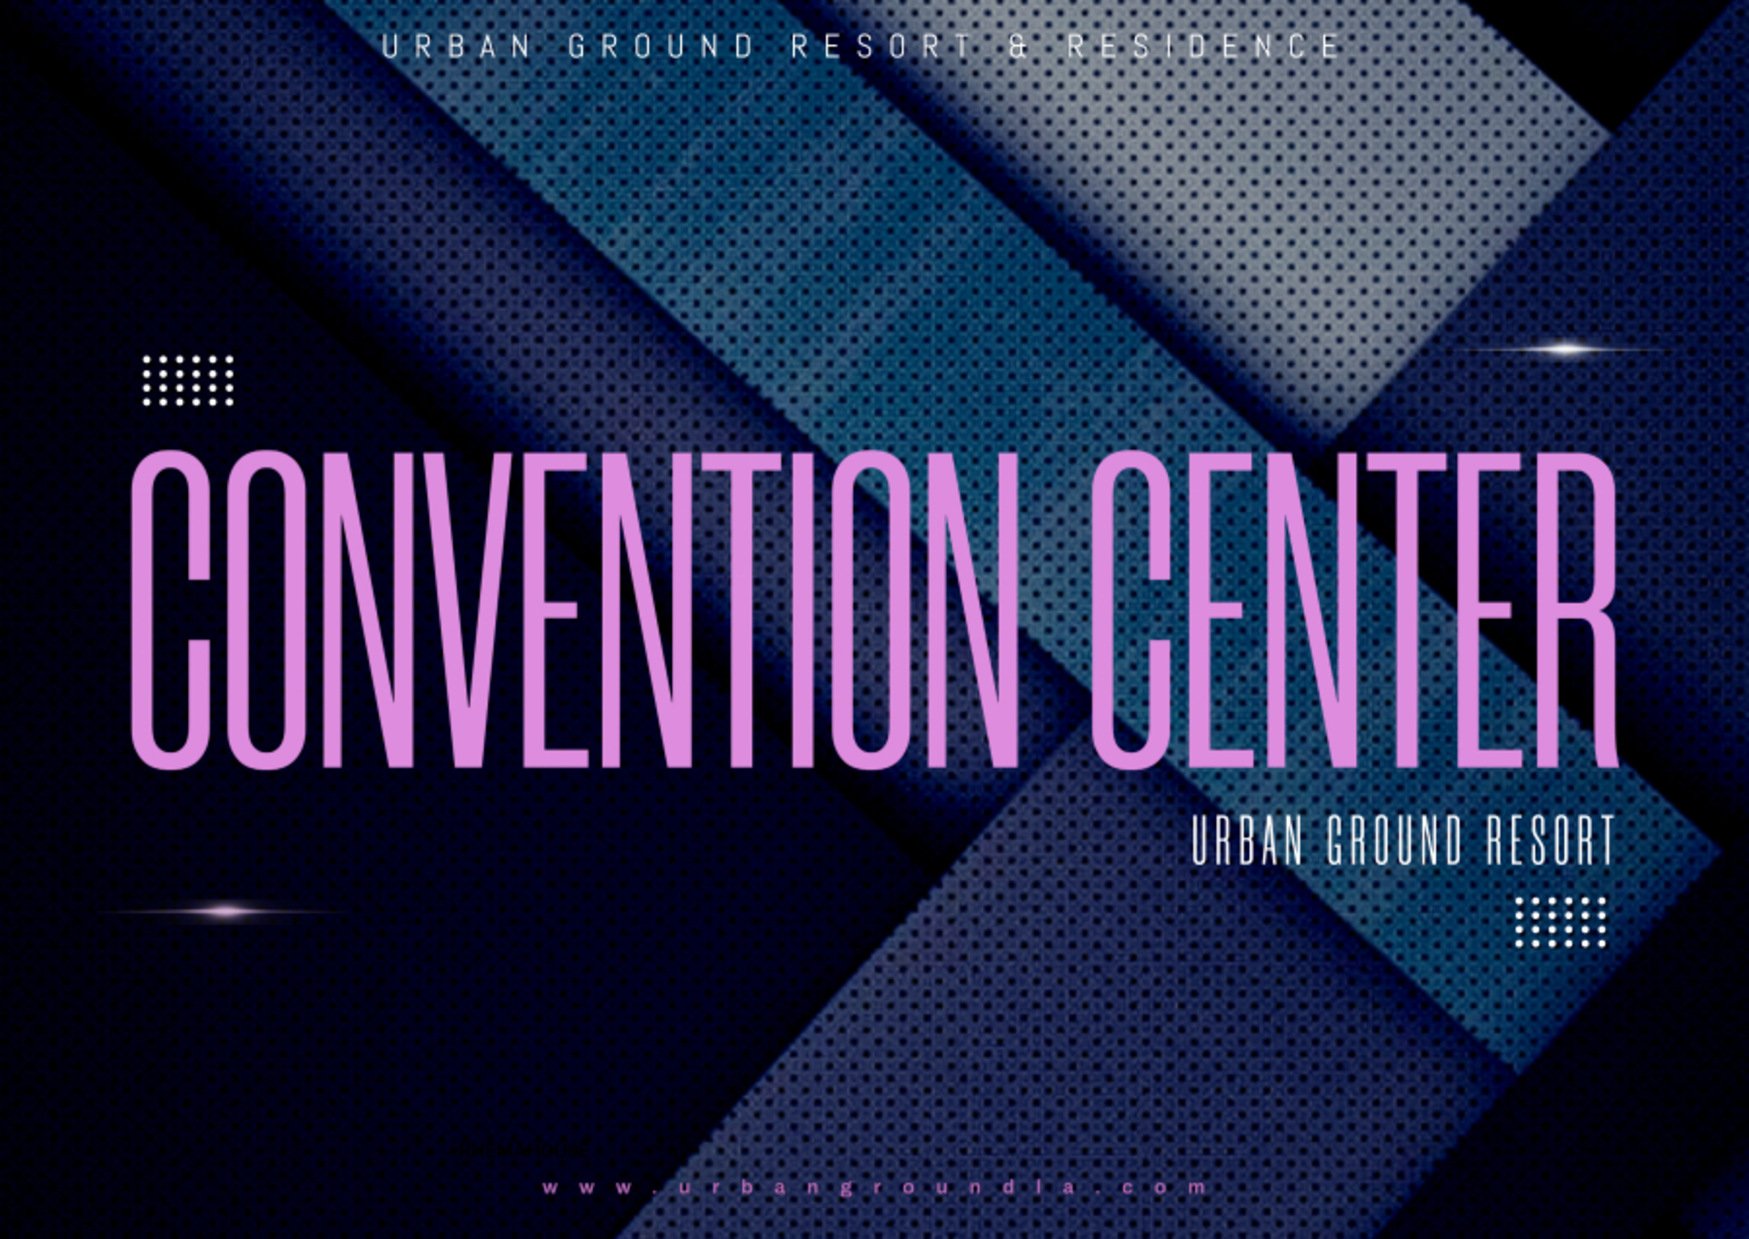 Convention Center Urban Ground Resort & Residence